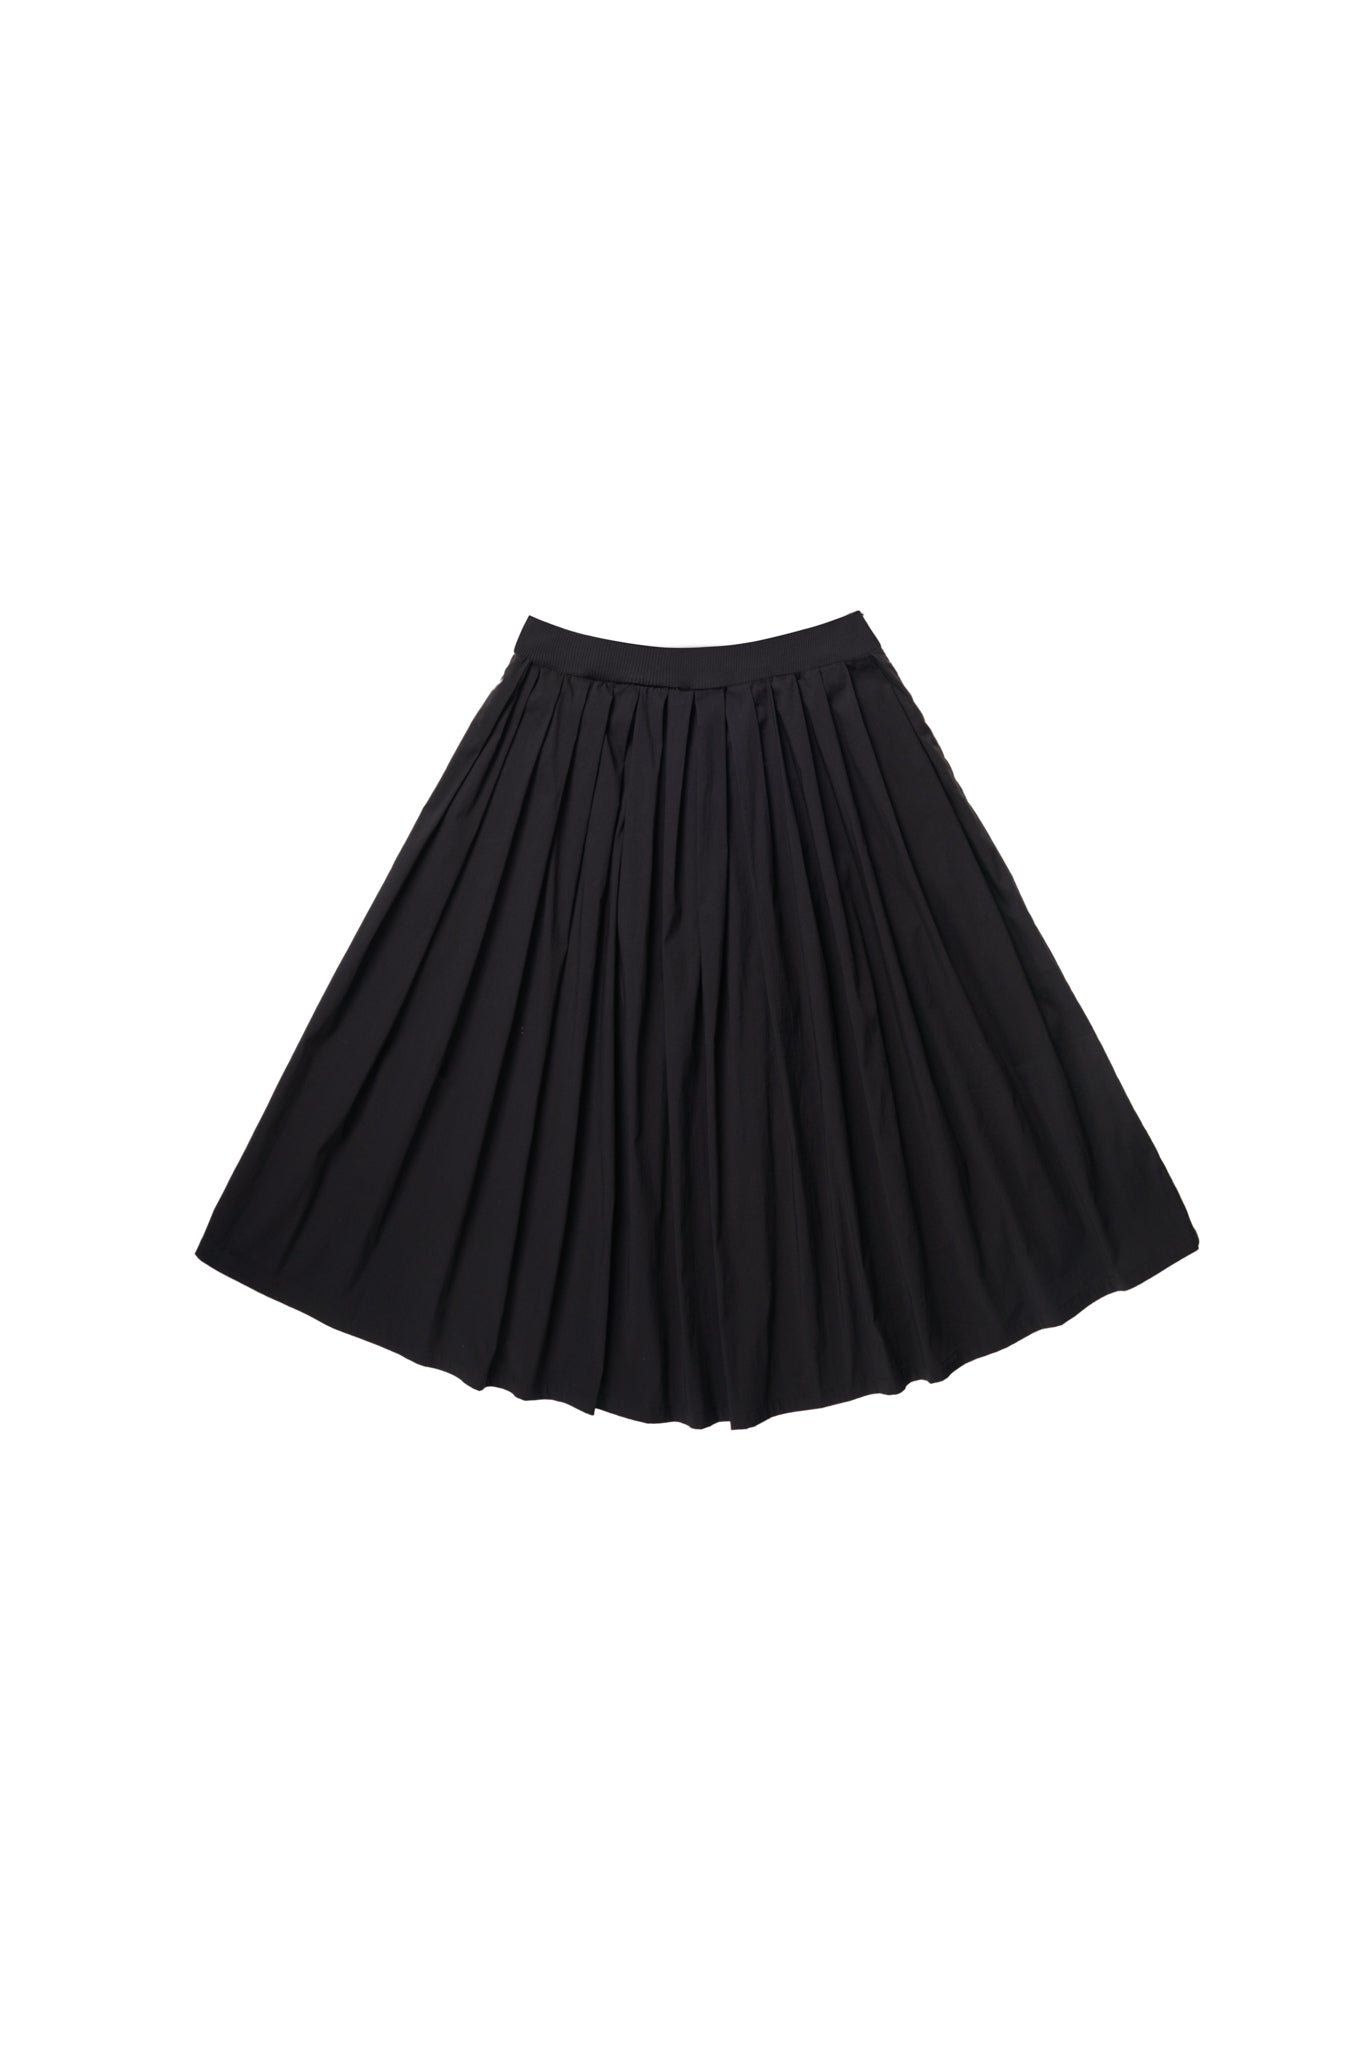 Luna Skirt in Black #7999